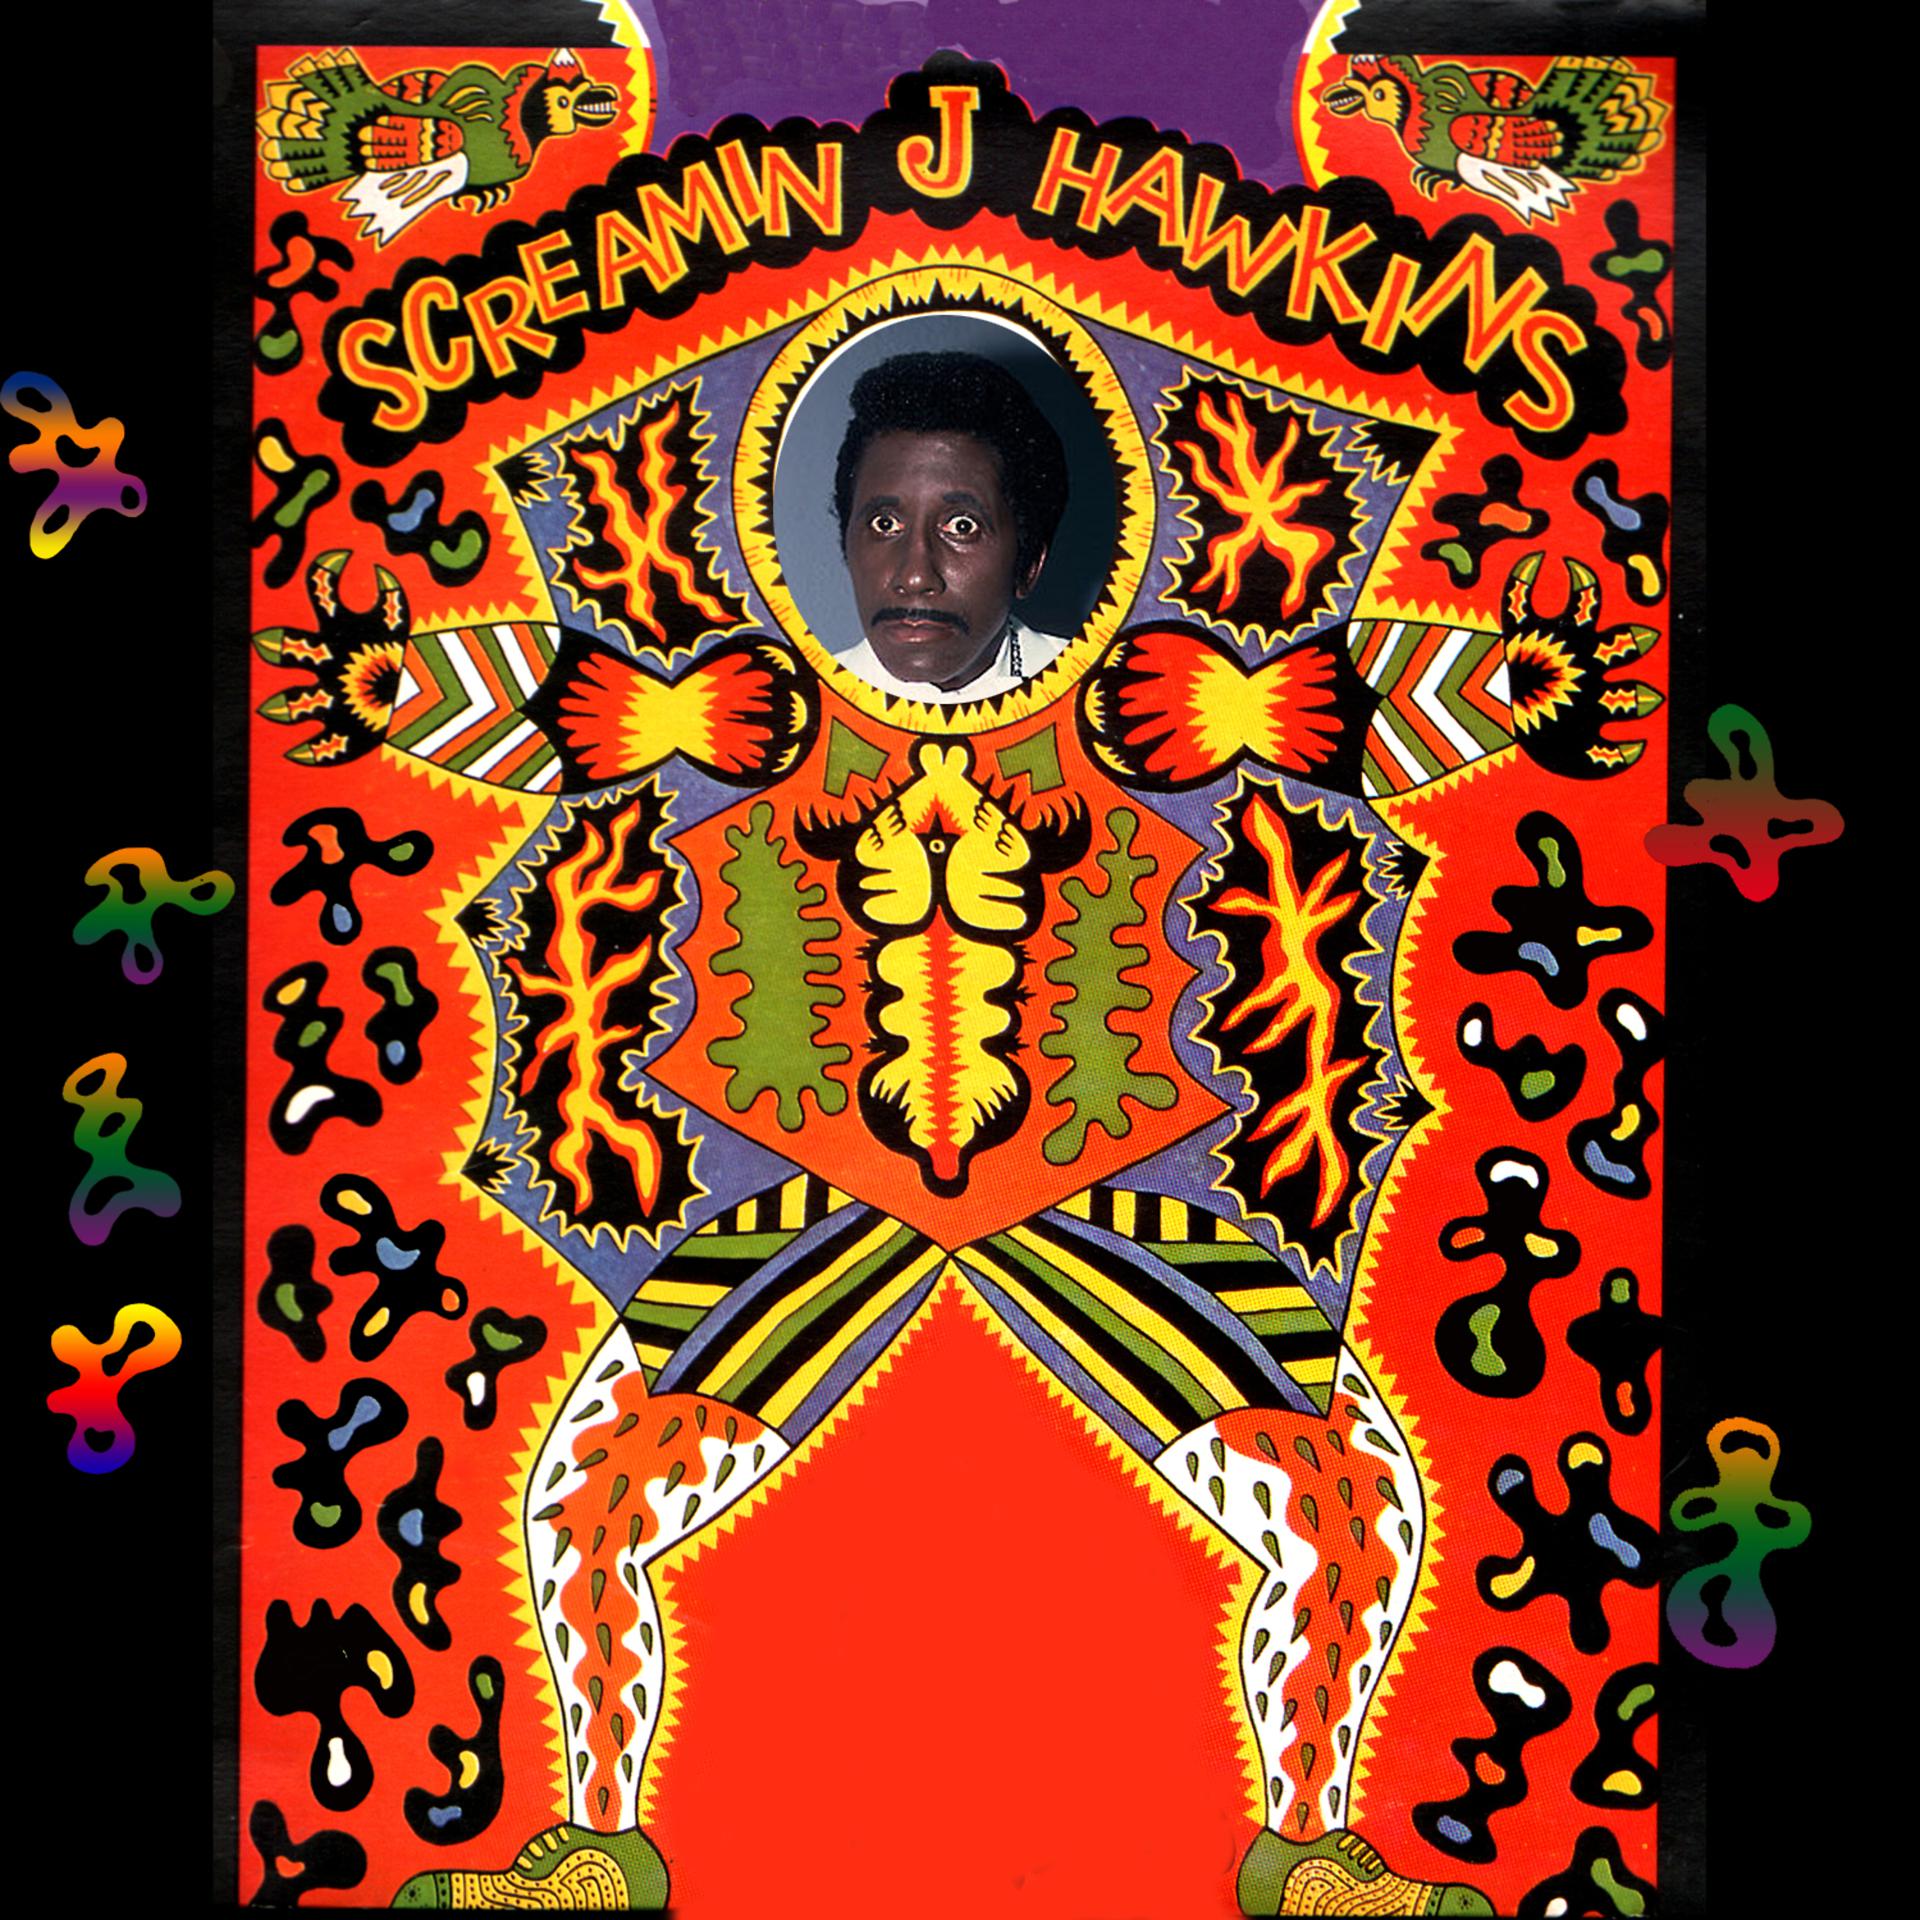 Постер альбома Screamin' Jay Hawkins